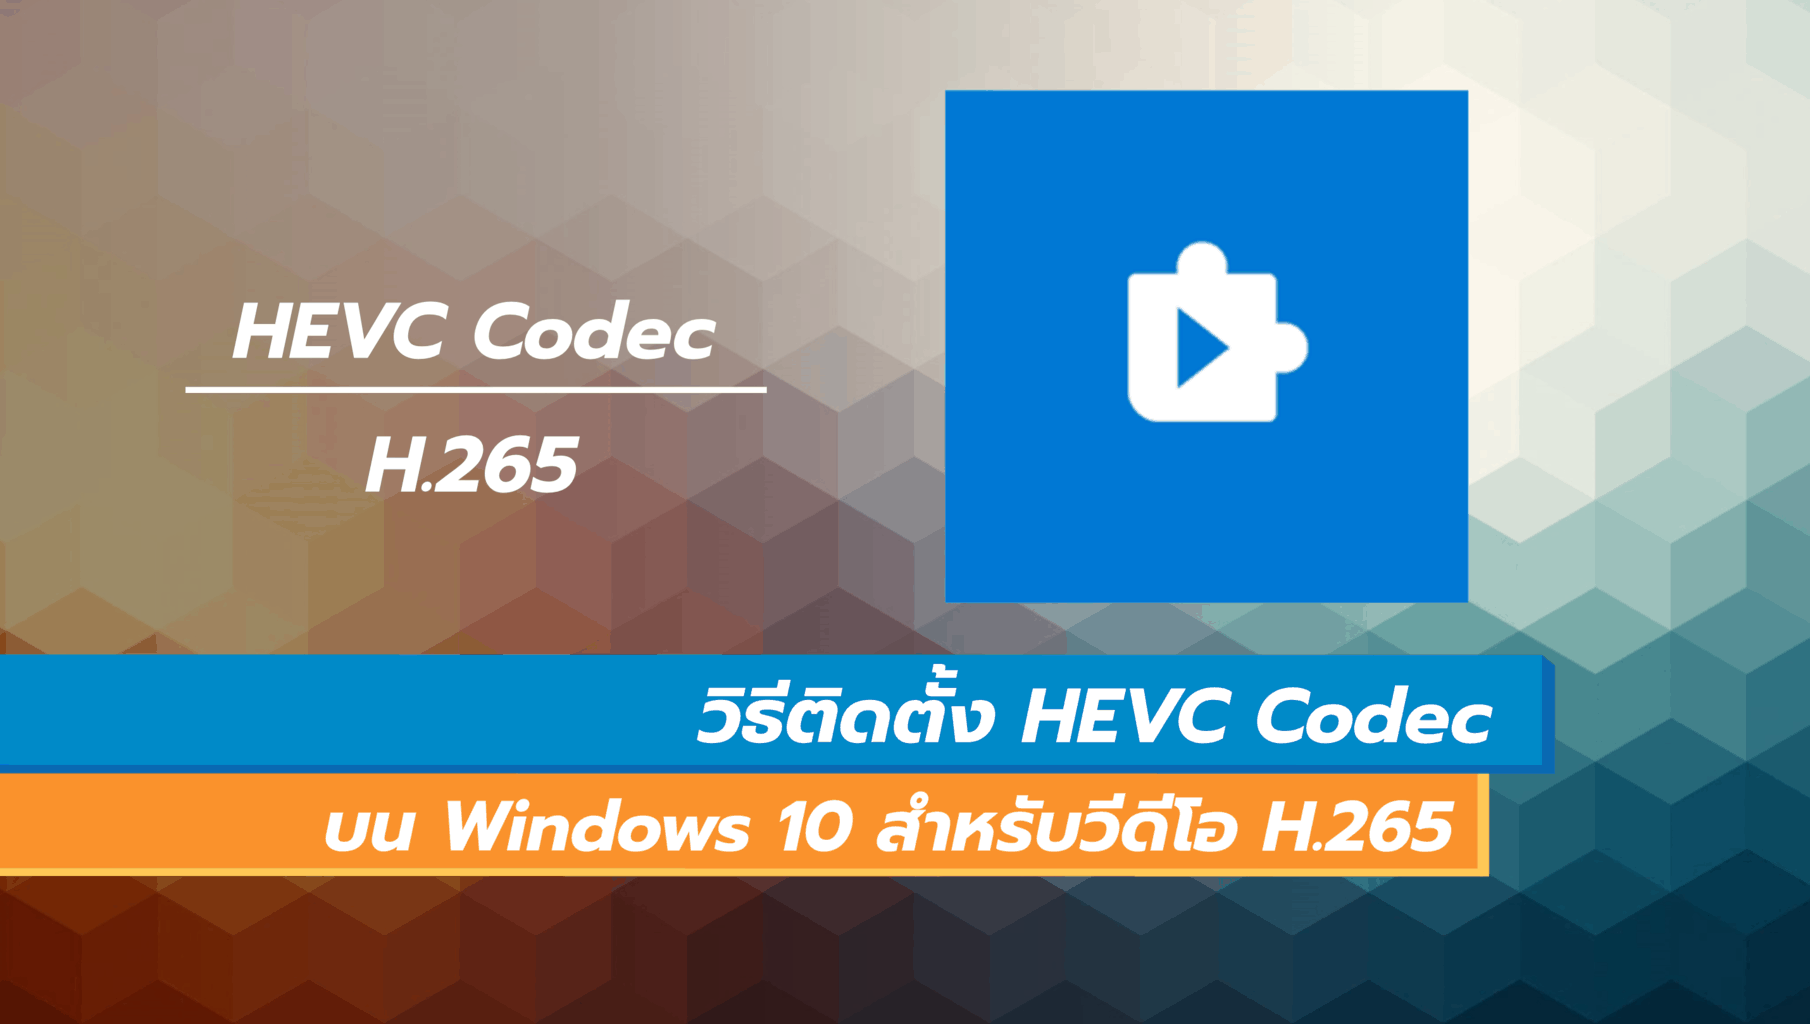 hevc codec windows 10 vlc